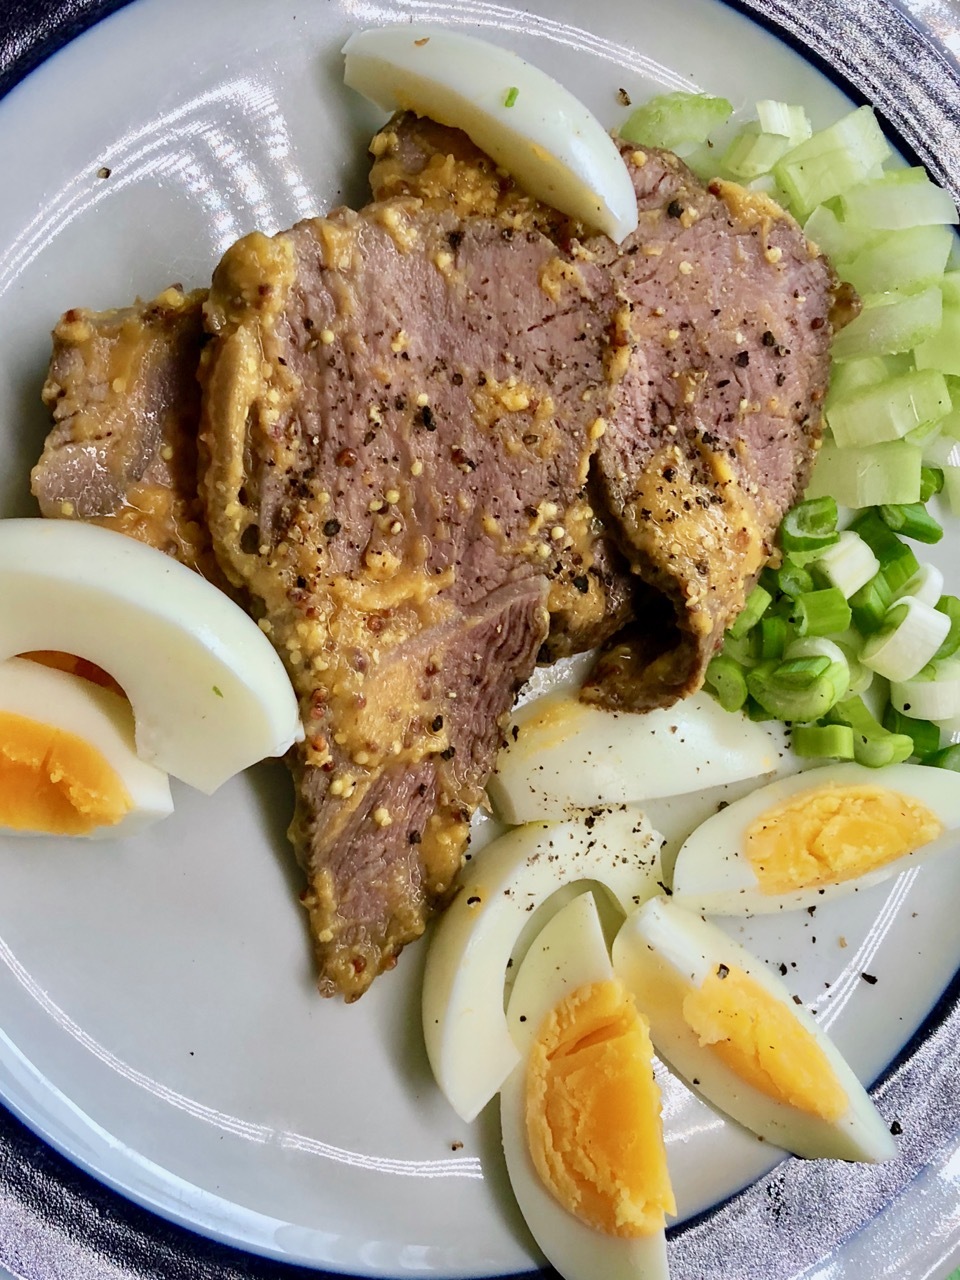 Kalbfleisch-Eier-Salat mit Senf Vinaigrette